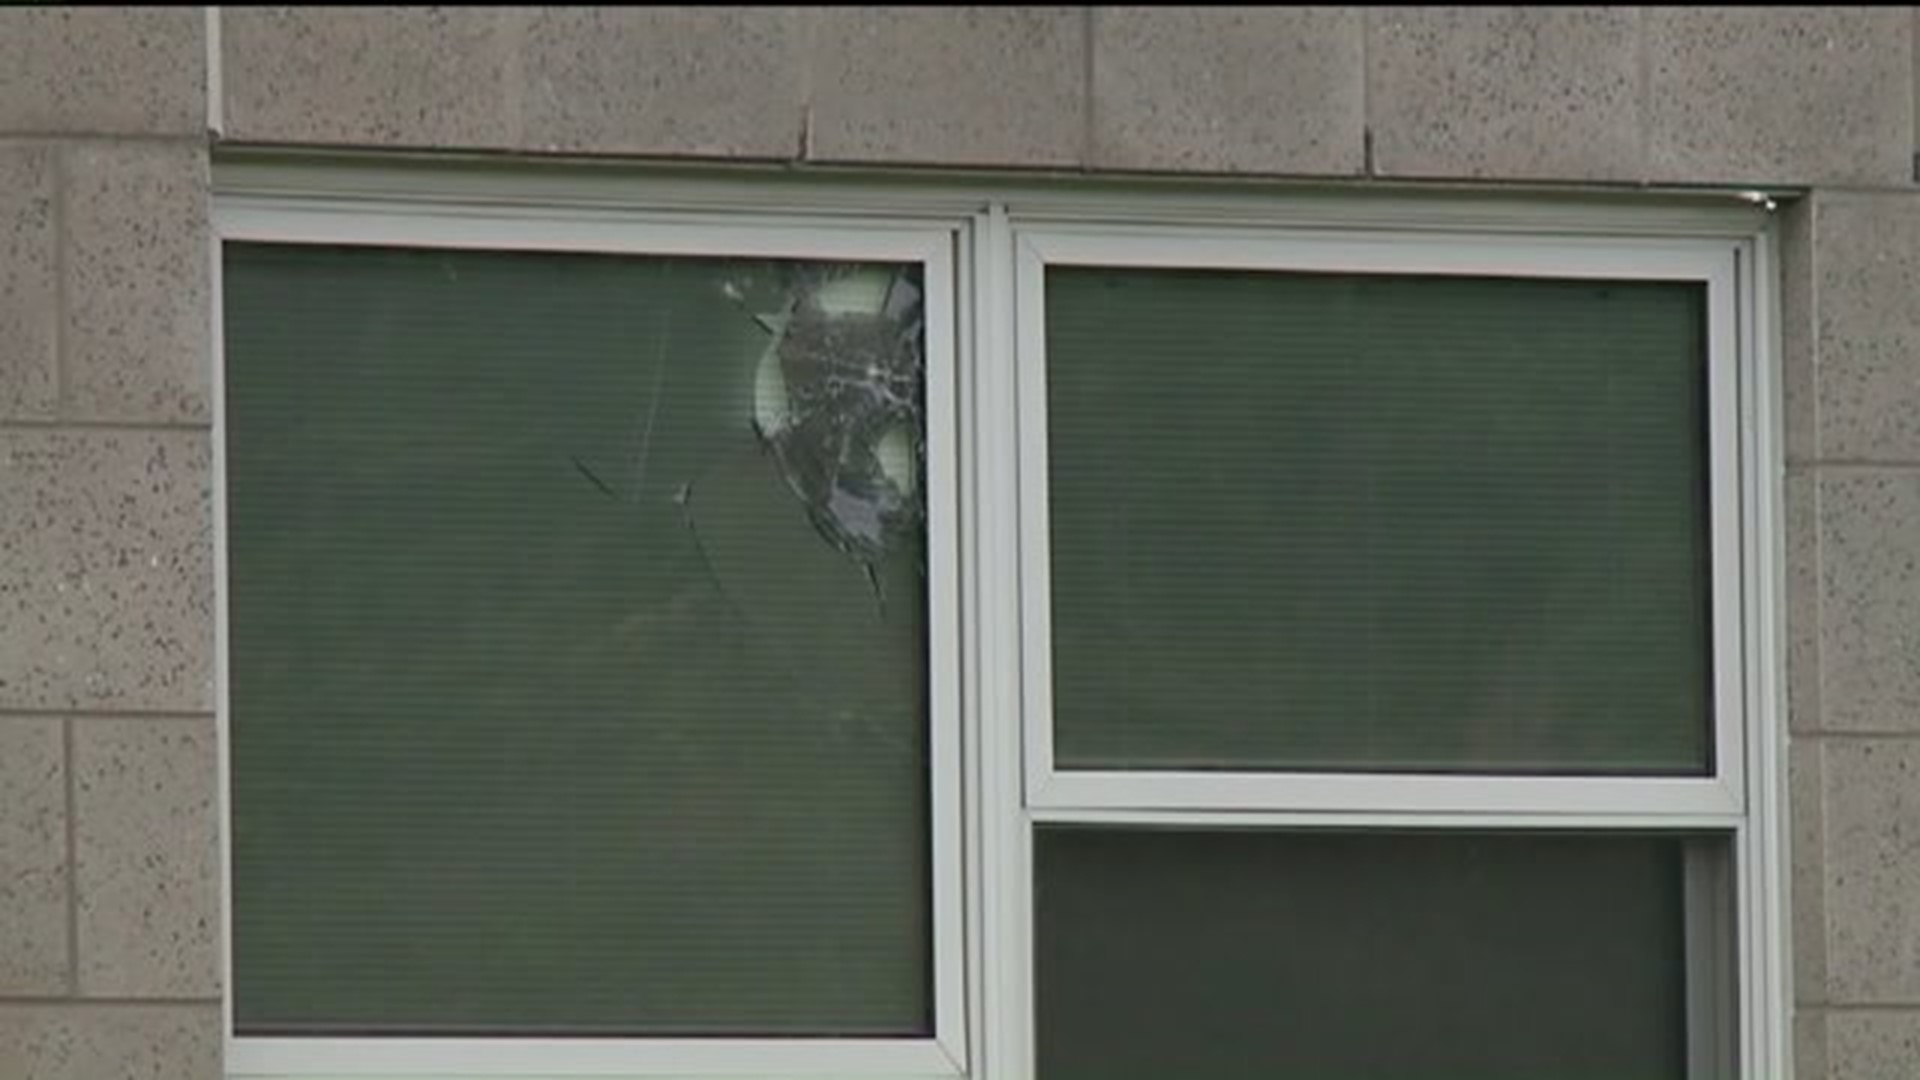 Vandals Smash Windows at Middle School